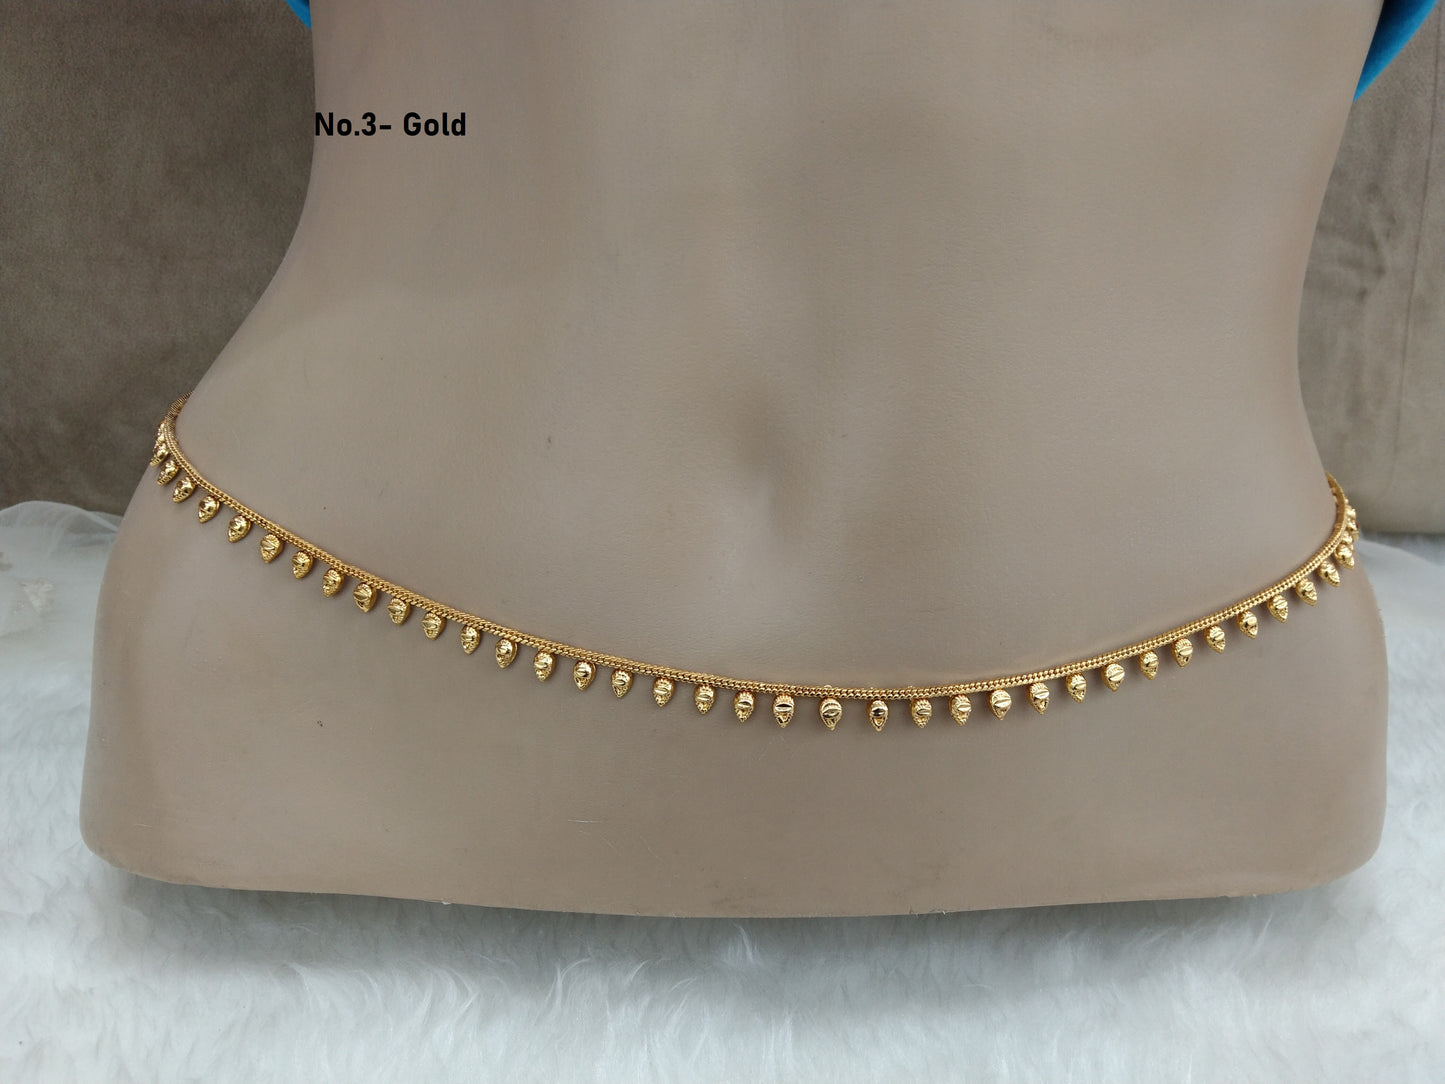 Gold belt Sari Saree Belly Chain Jewellery Indian Kamarbandh Kamarband shina Belt